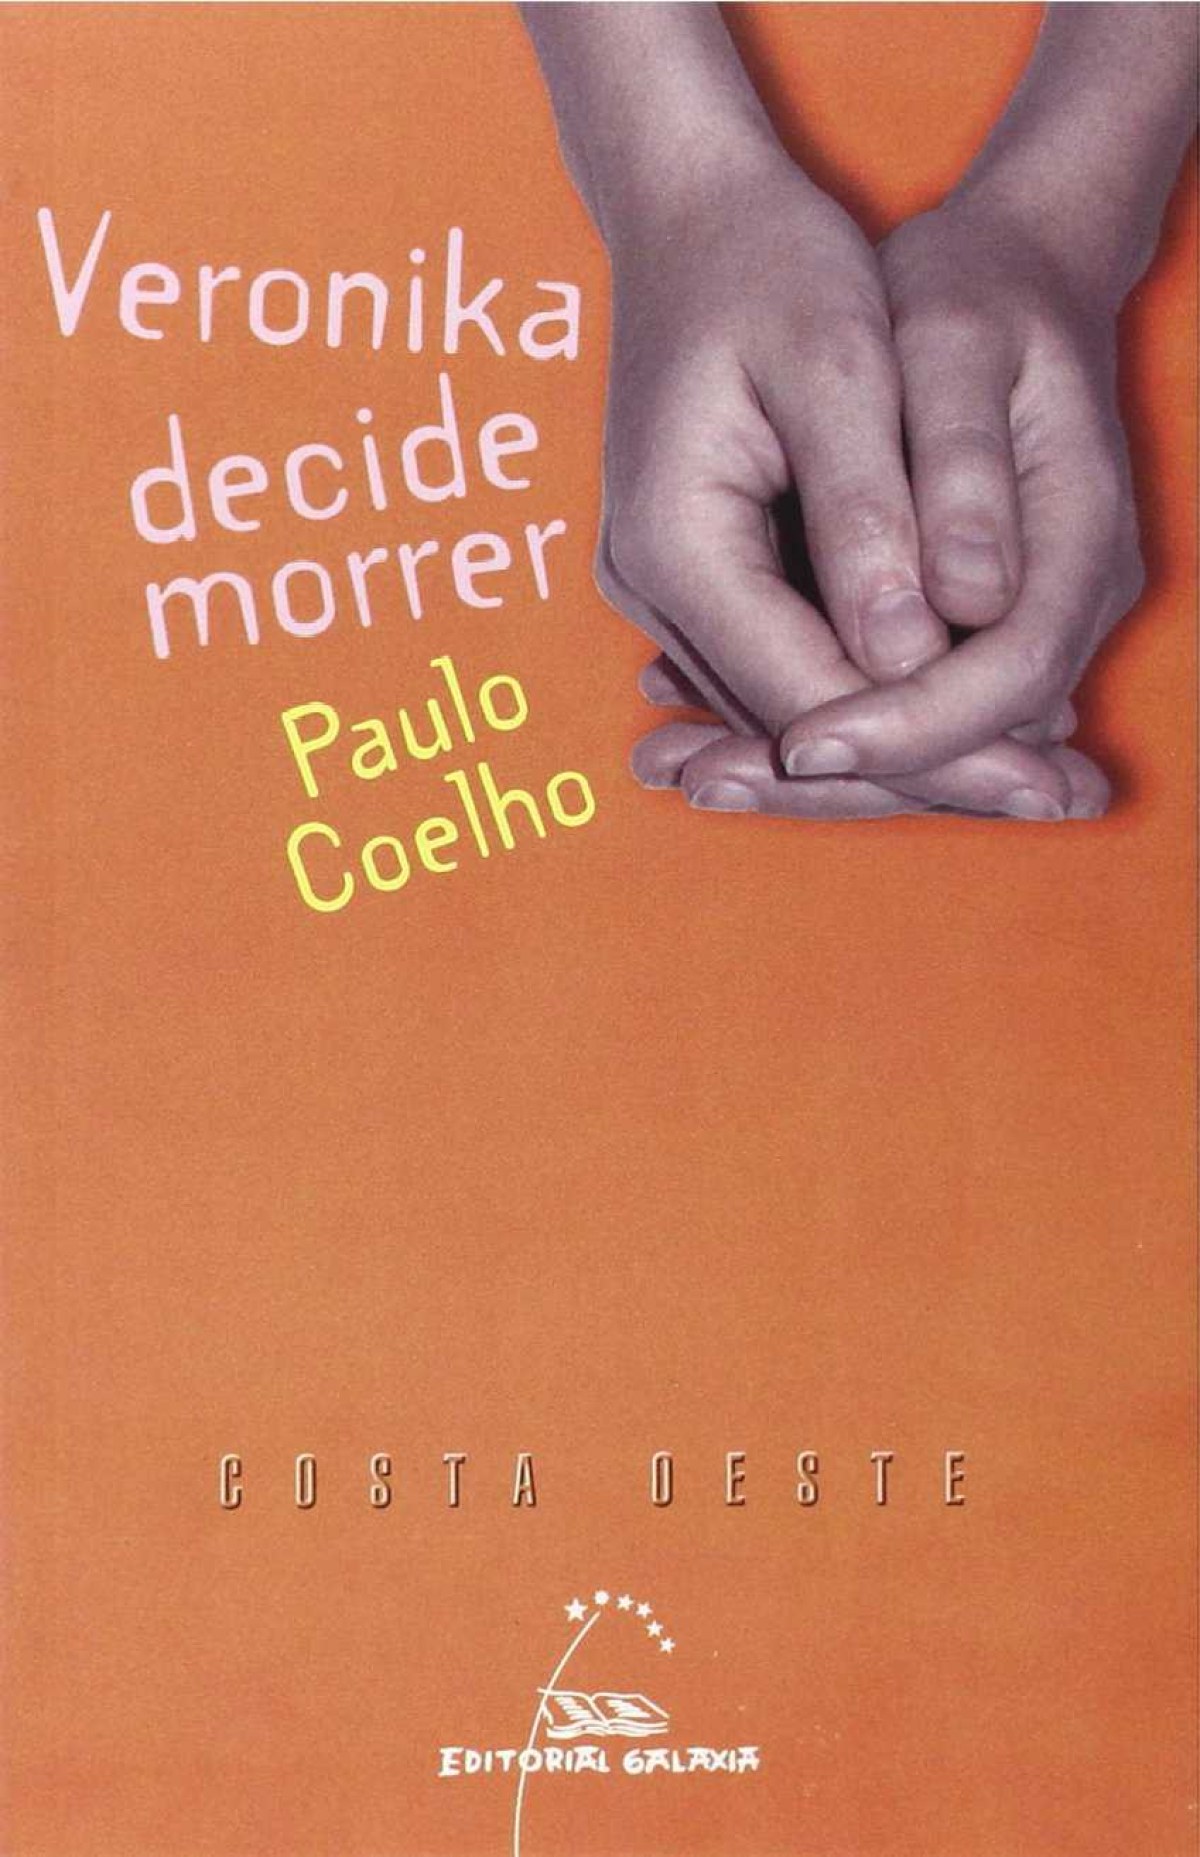 Veronika decide morrer - Coelho, Paulo